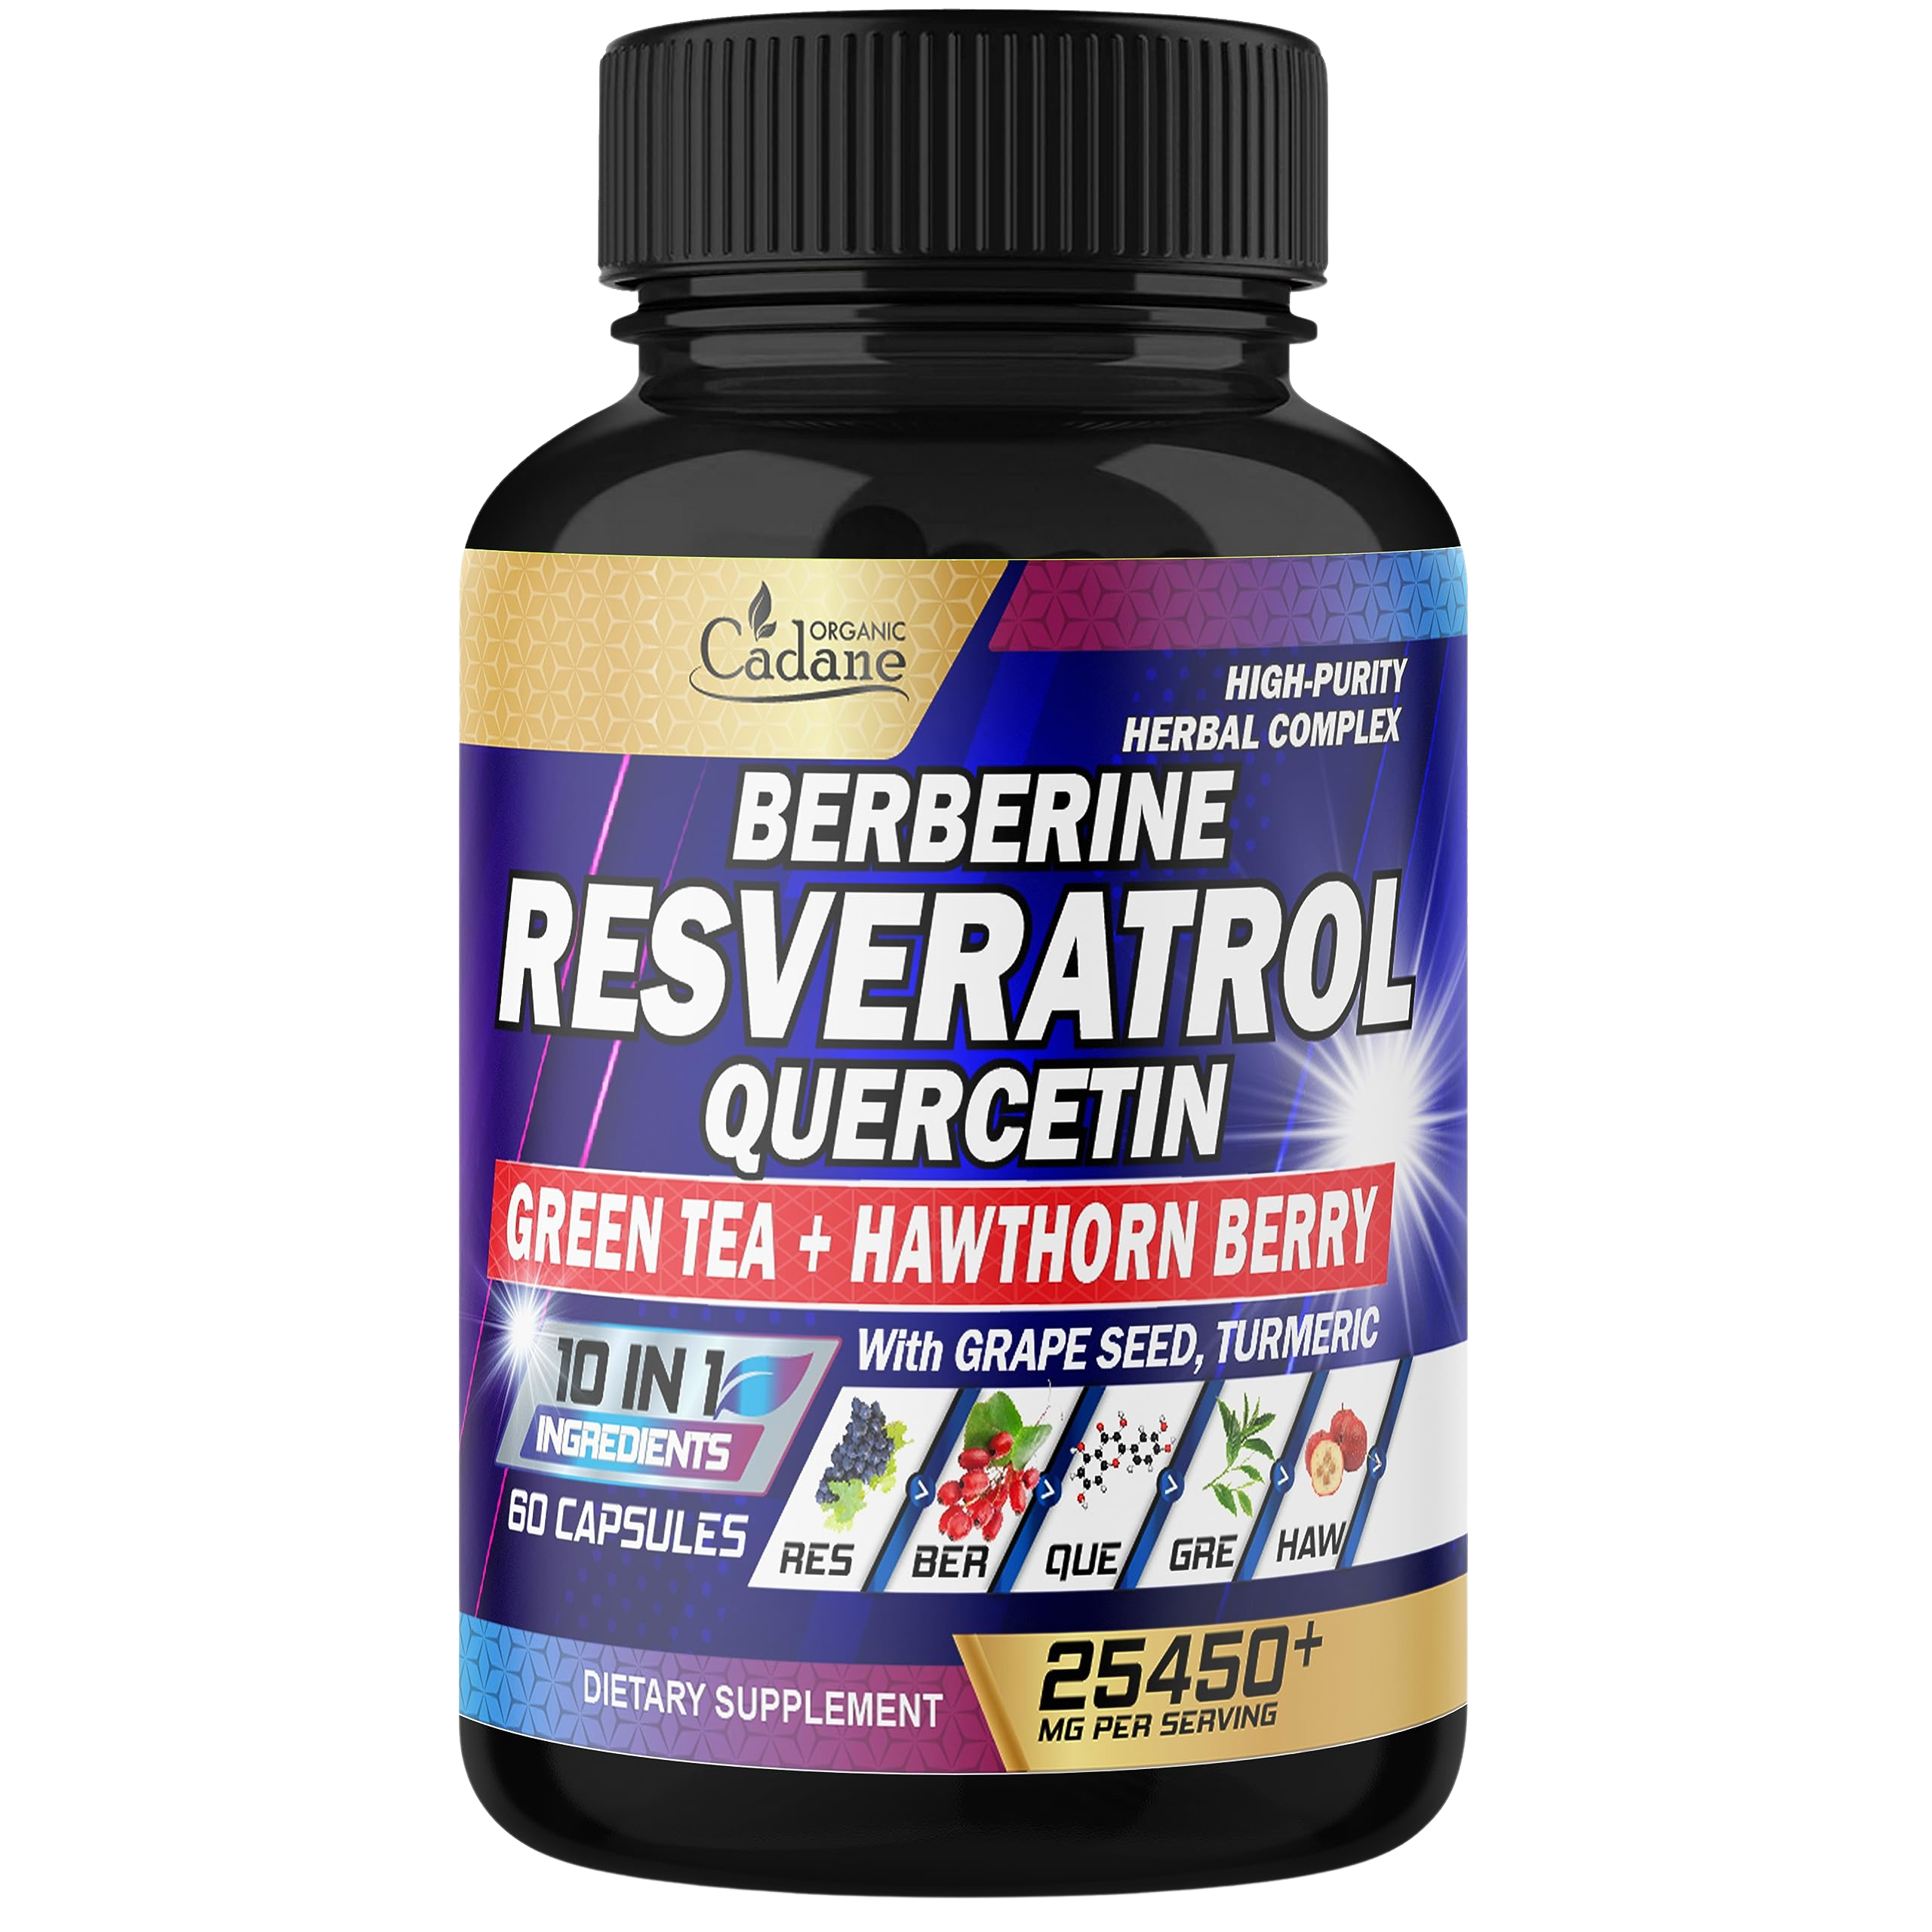 Organic Cadane Resveratrol Supplement